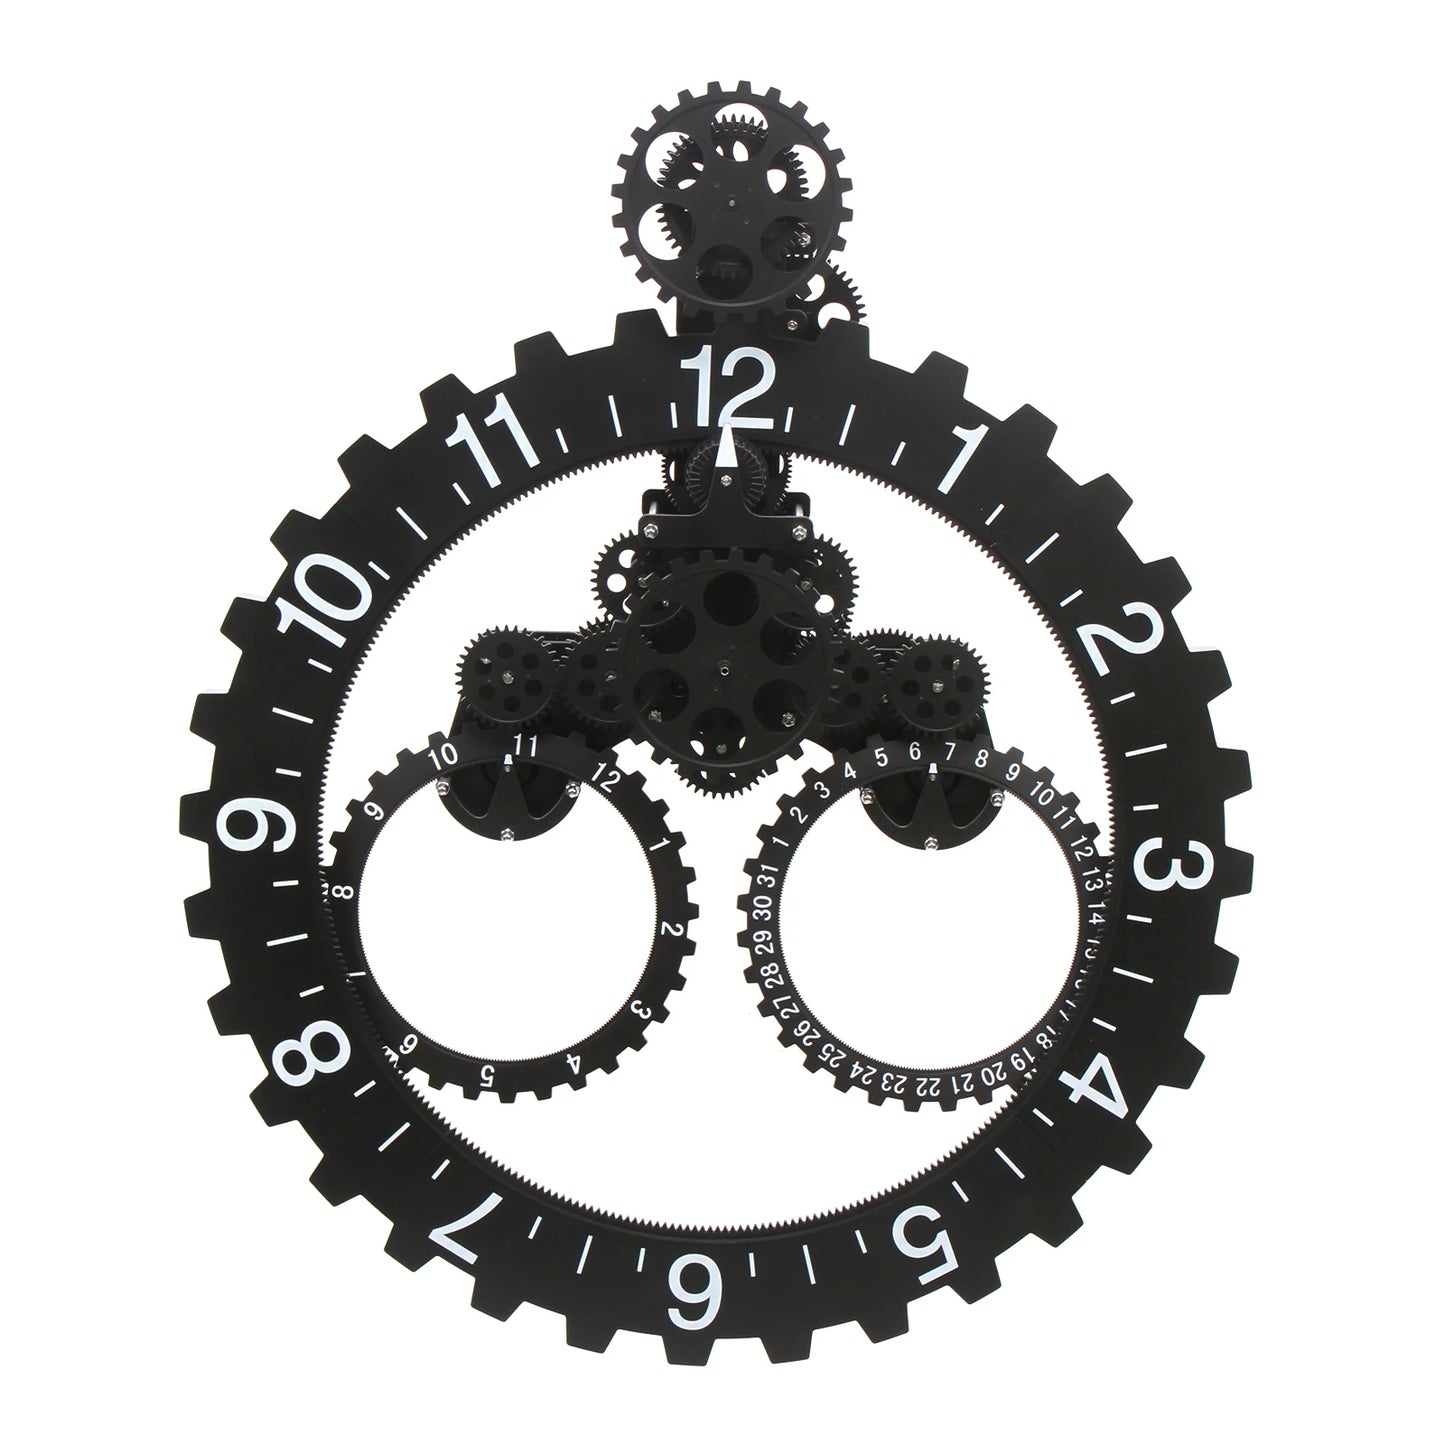 27" Silent Metal Industrial Mechanical Moving Gear Clock Silent